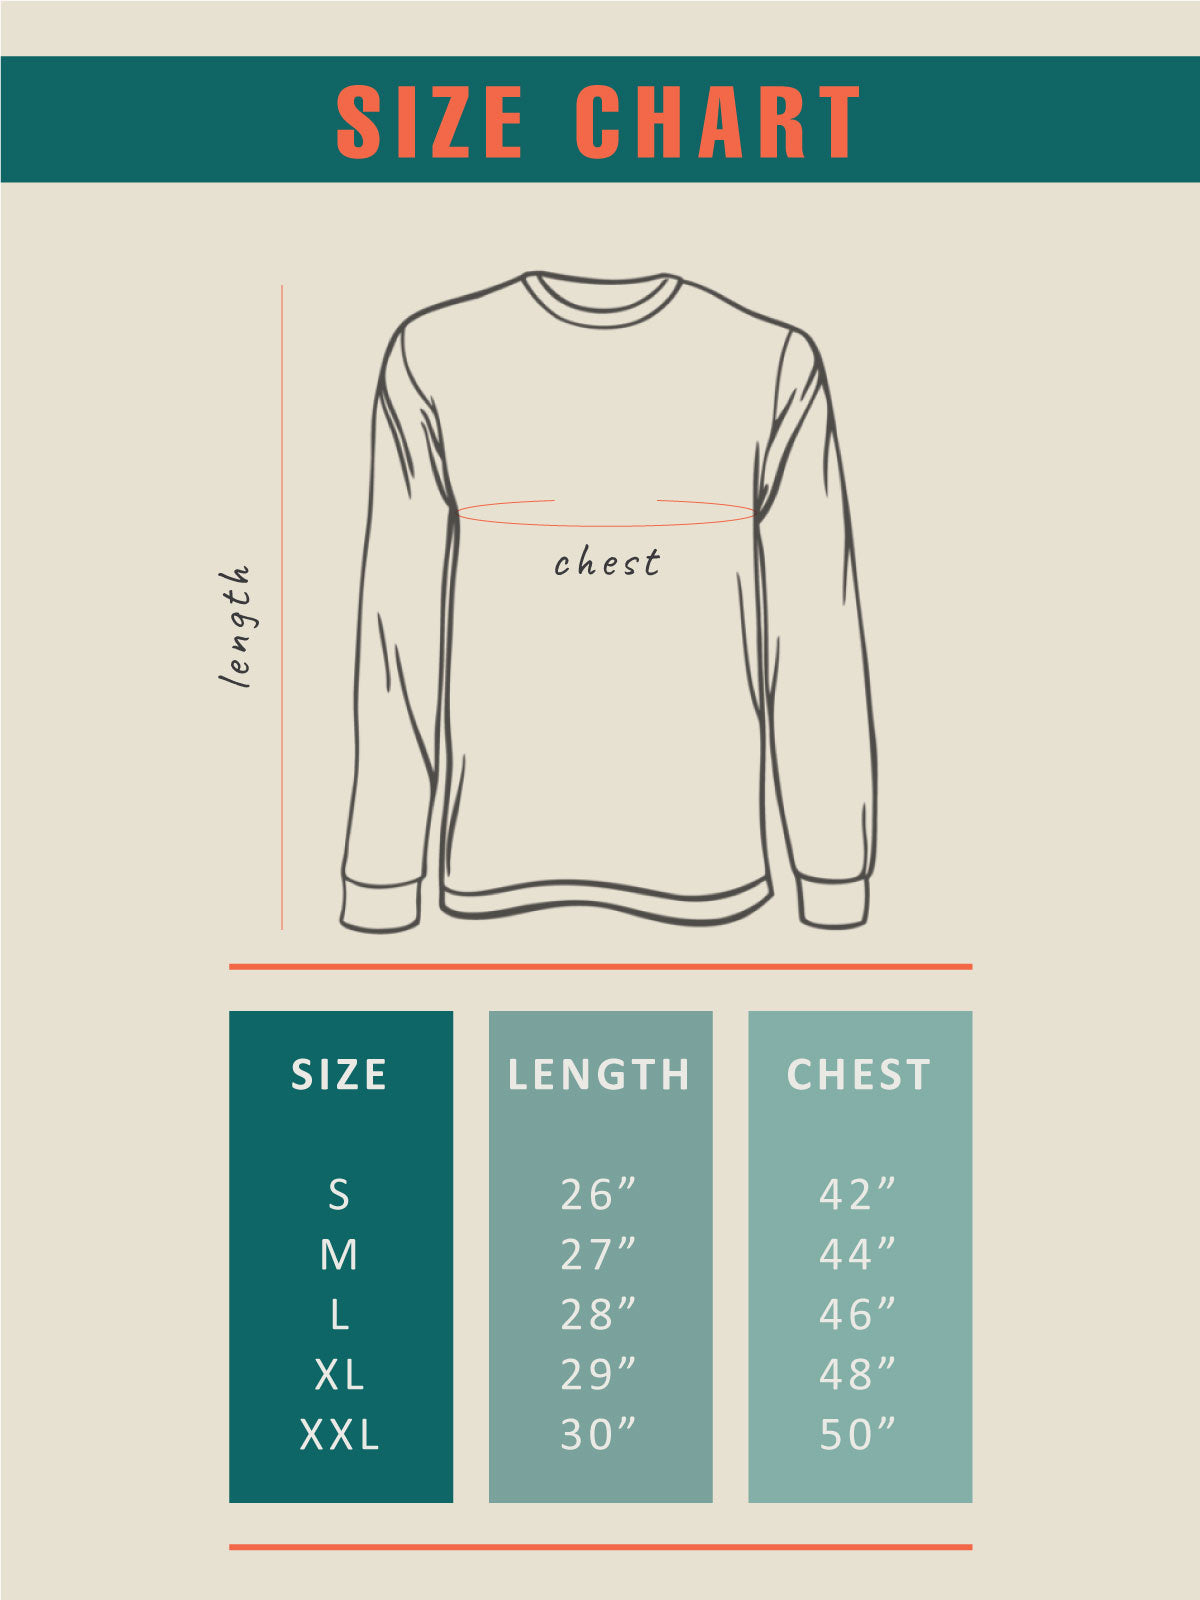 Black | Unisex Plain Sweatshirt